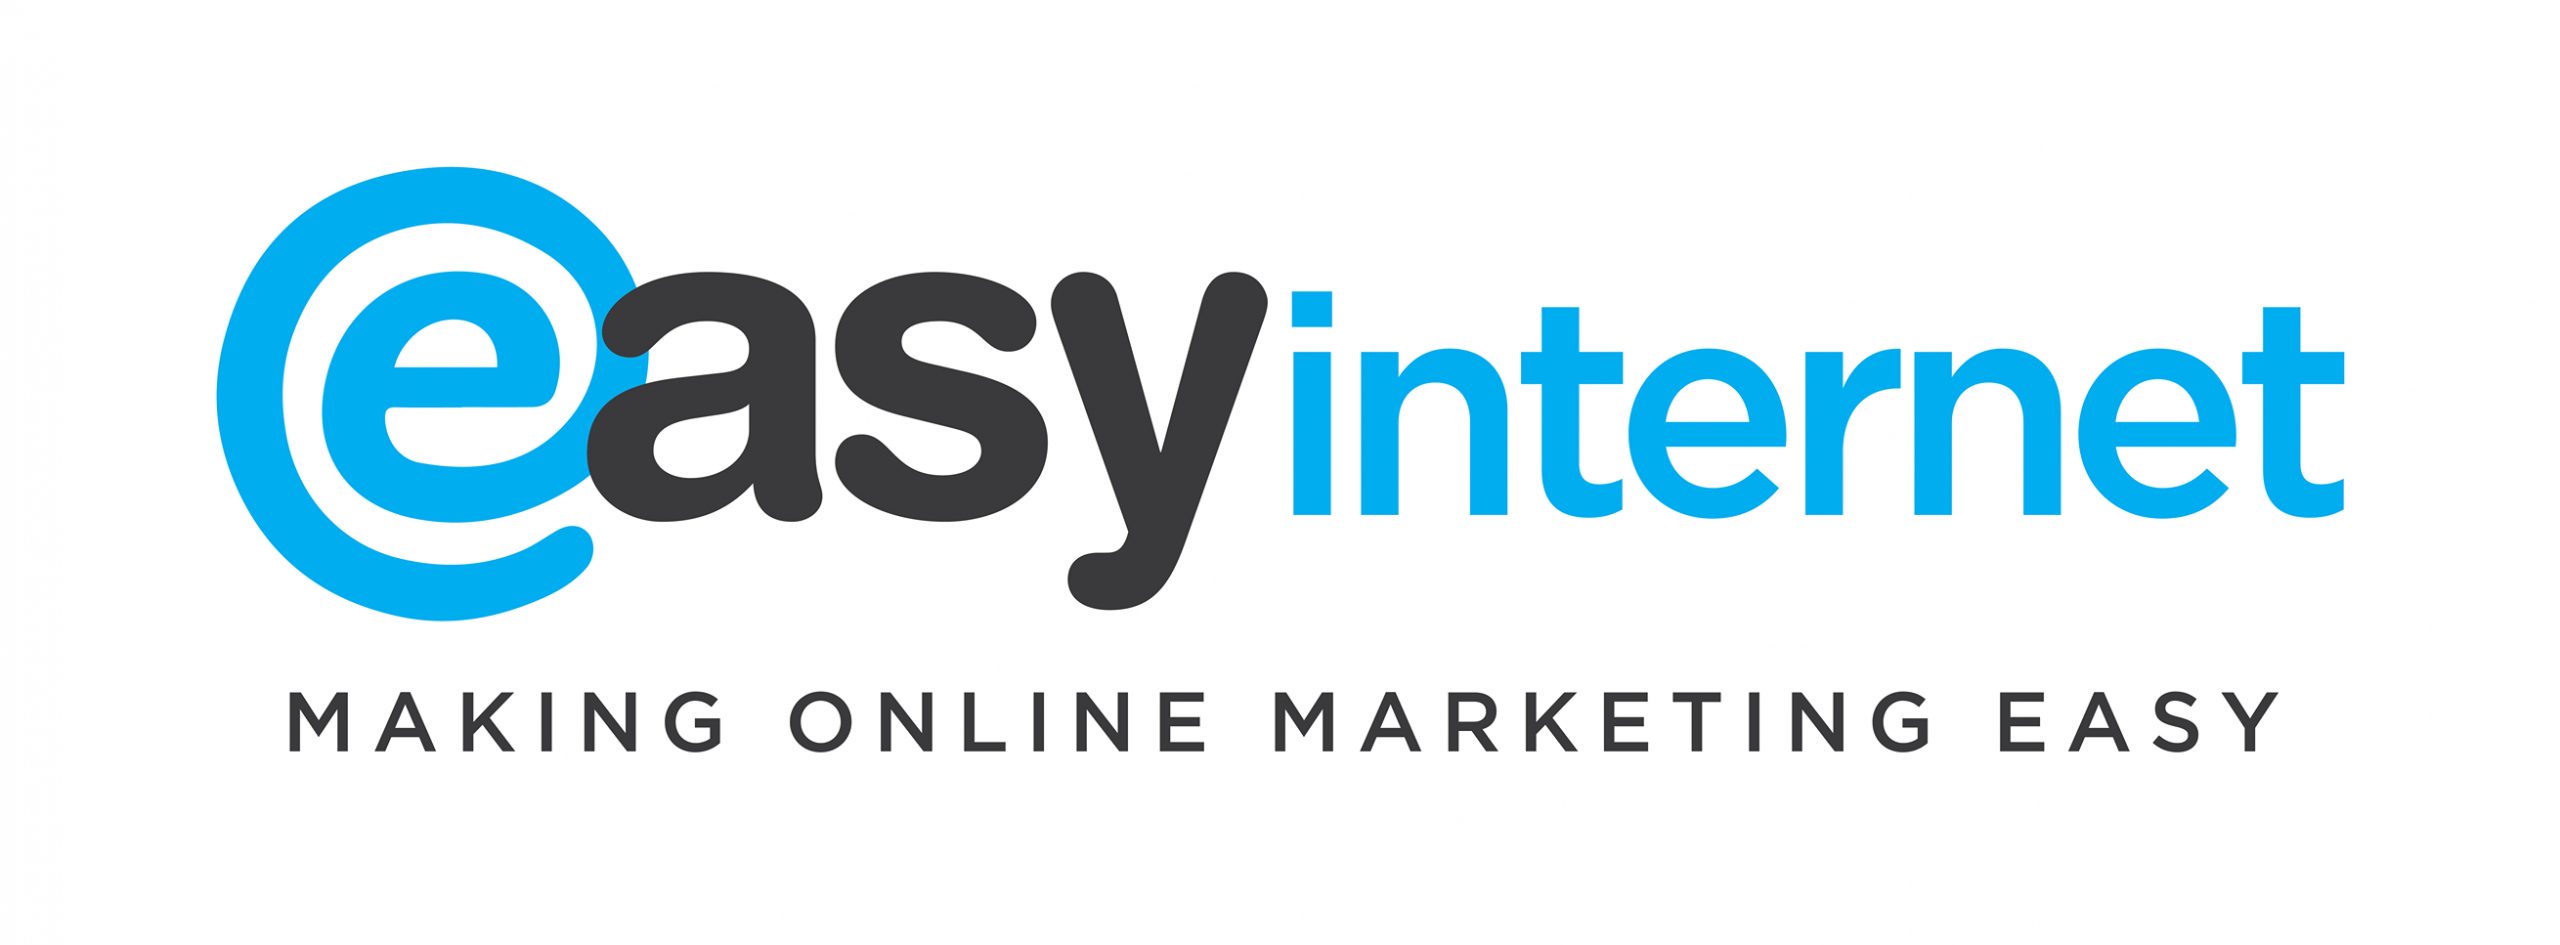 Easy Internet logo